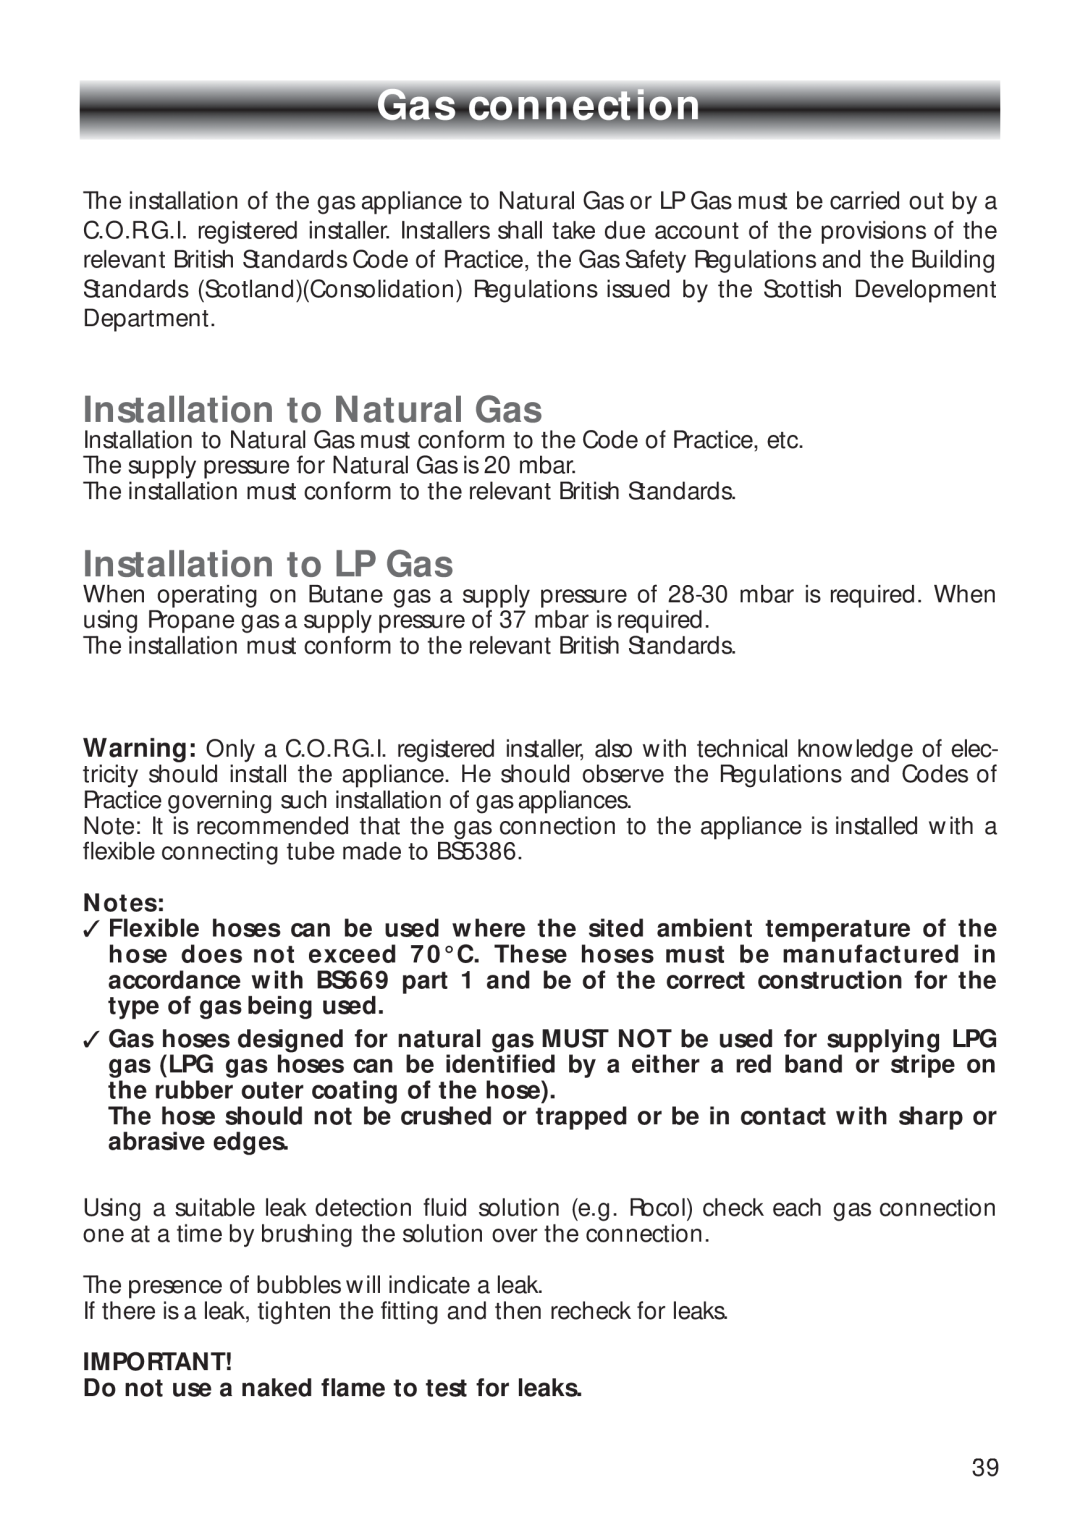 CDA RV 700 installation instructions Gas connection, Installation to Natural Gas, Installation to LP Gas 